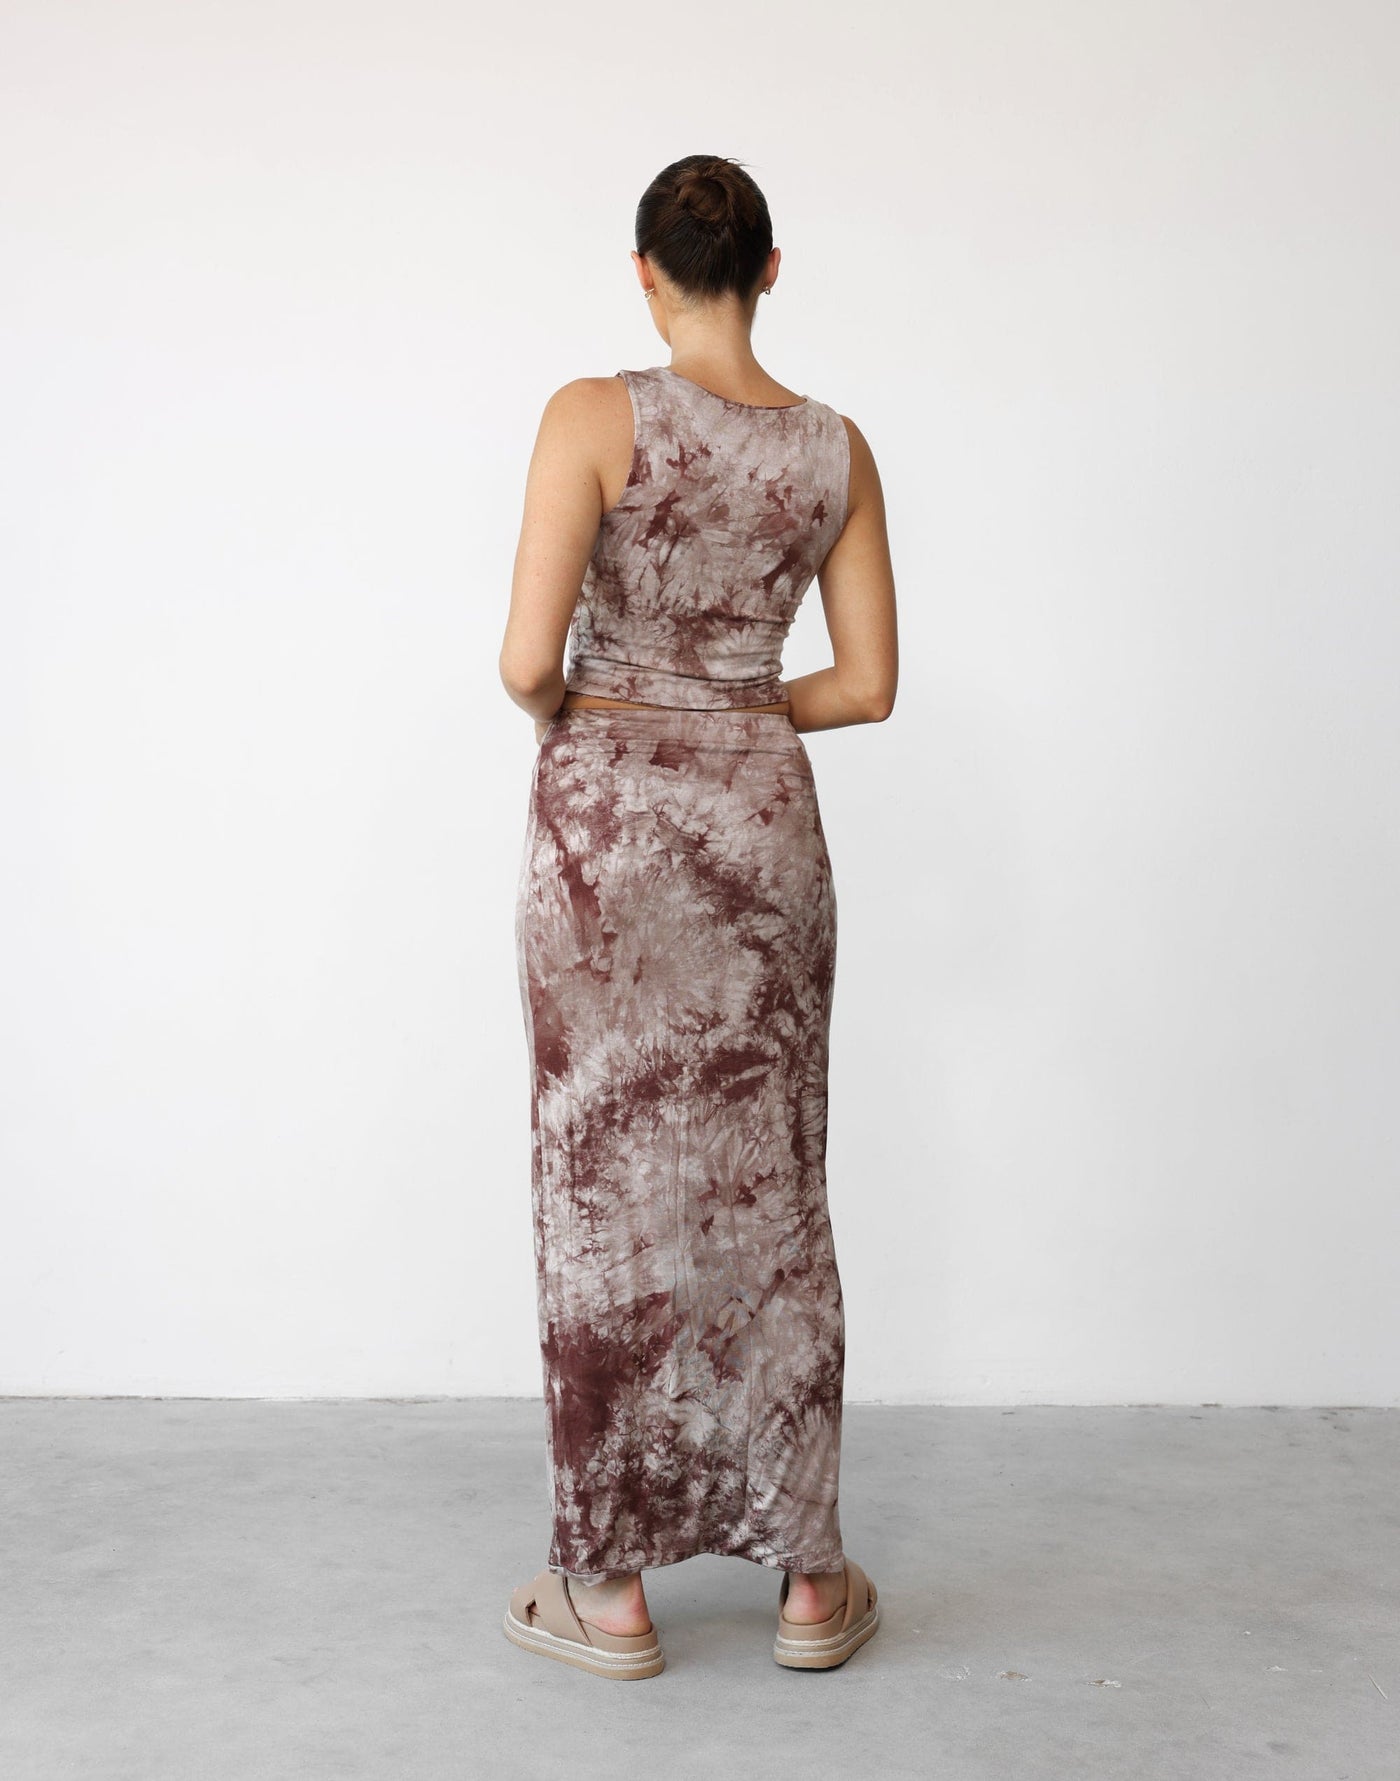 Nitara Top (Taupe Tie Die) - Bodycon Printed Sleeveless Top - Women's Top - Charcoal Clothing